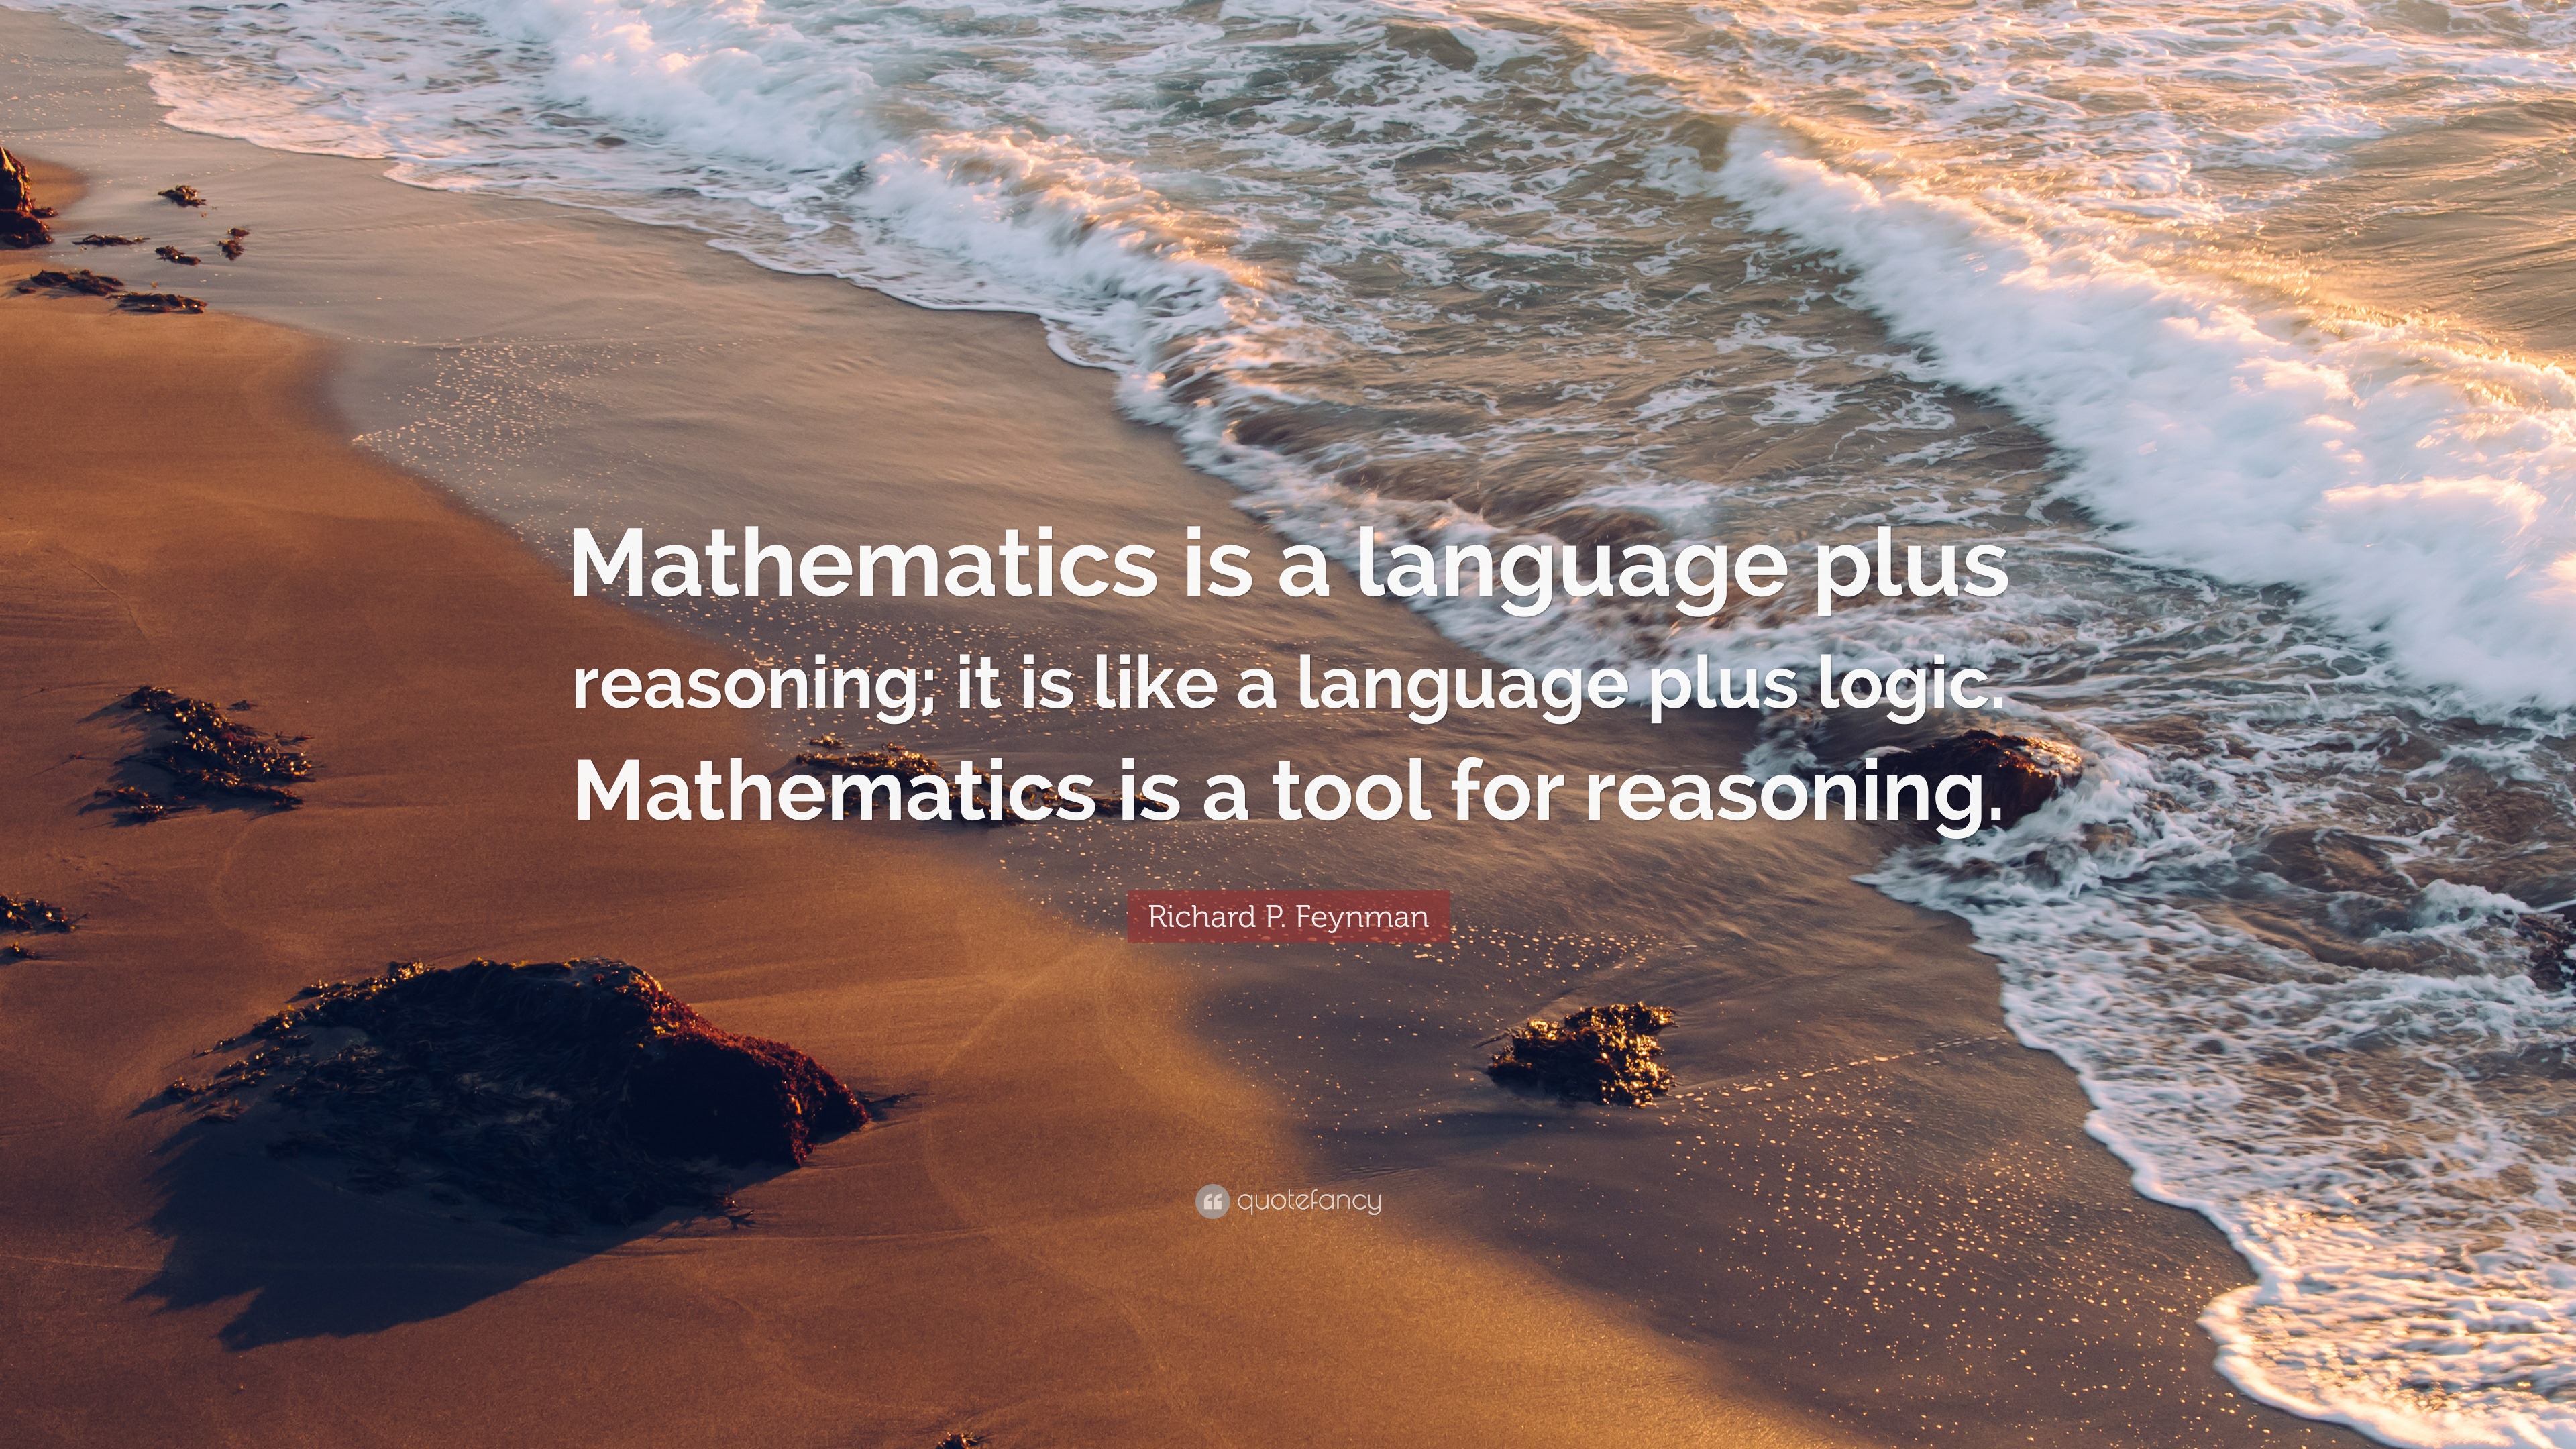 Richard P. Feynman Quote: “Mathematics is a language plus reasoning; it